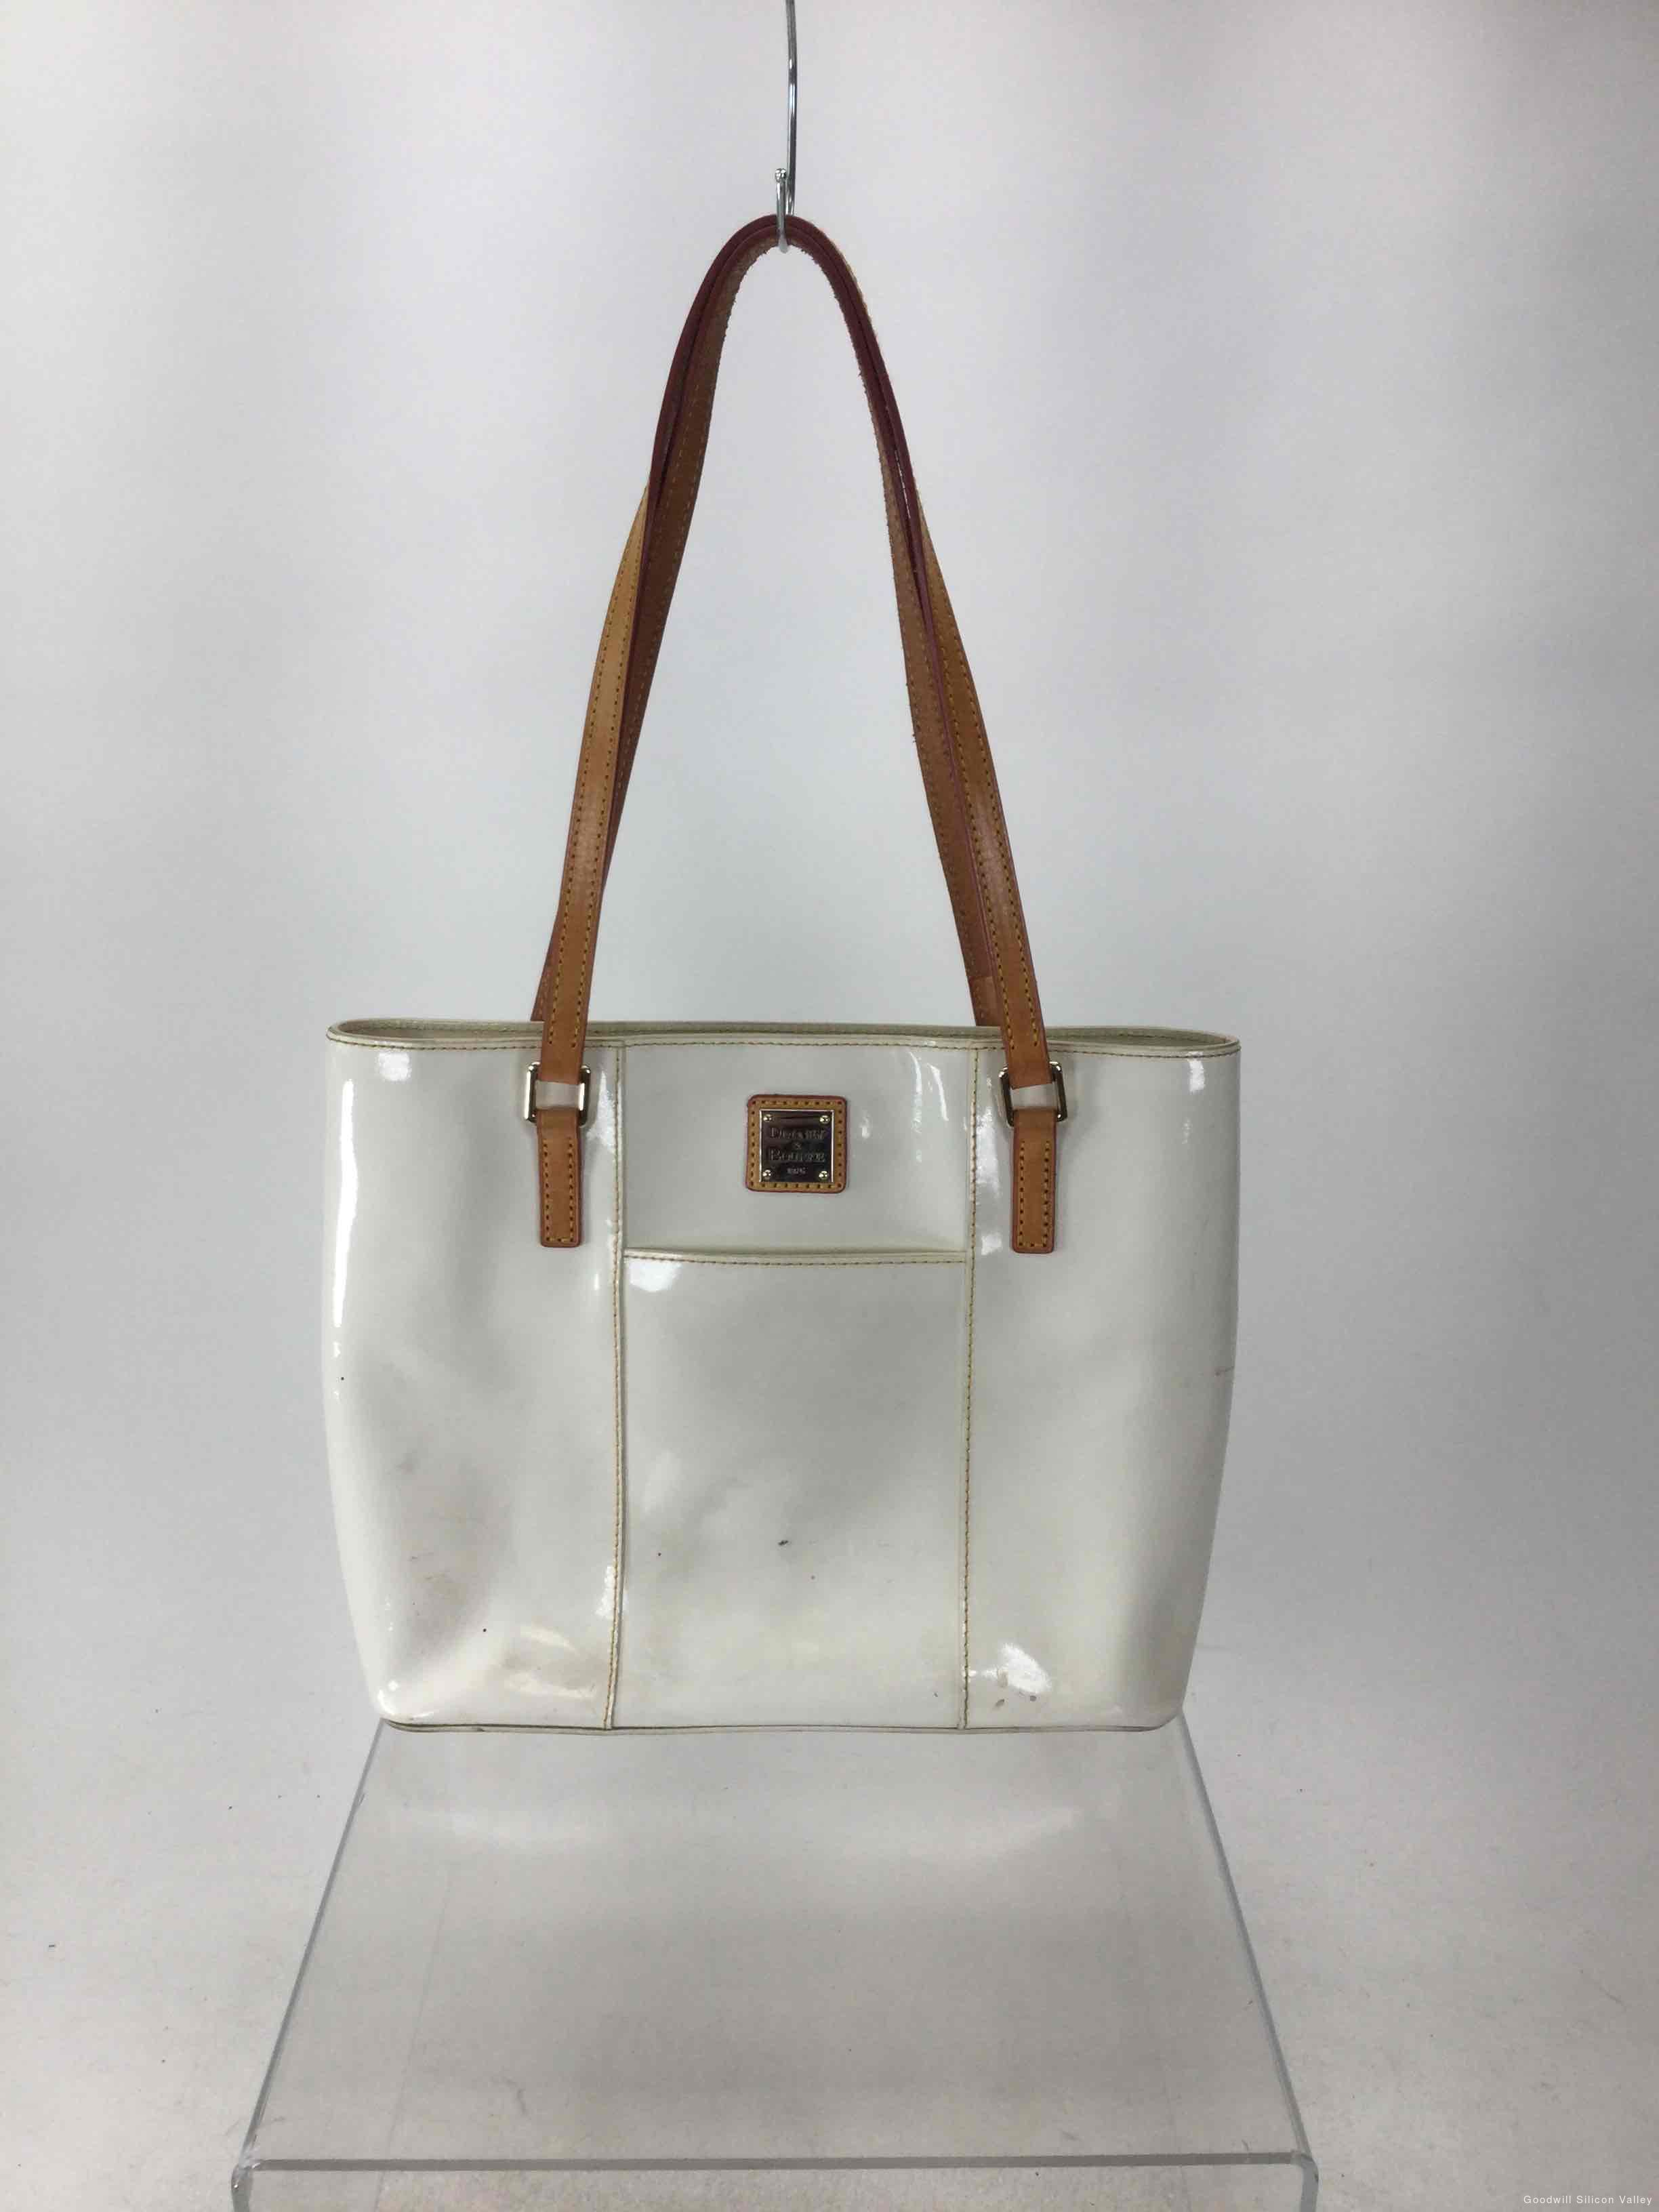 Dooney & Bourke Ivory Patent Leather Tote Bag | eBay